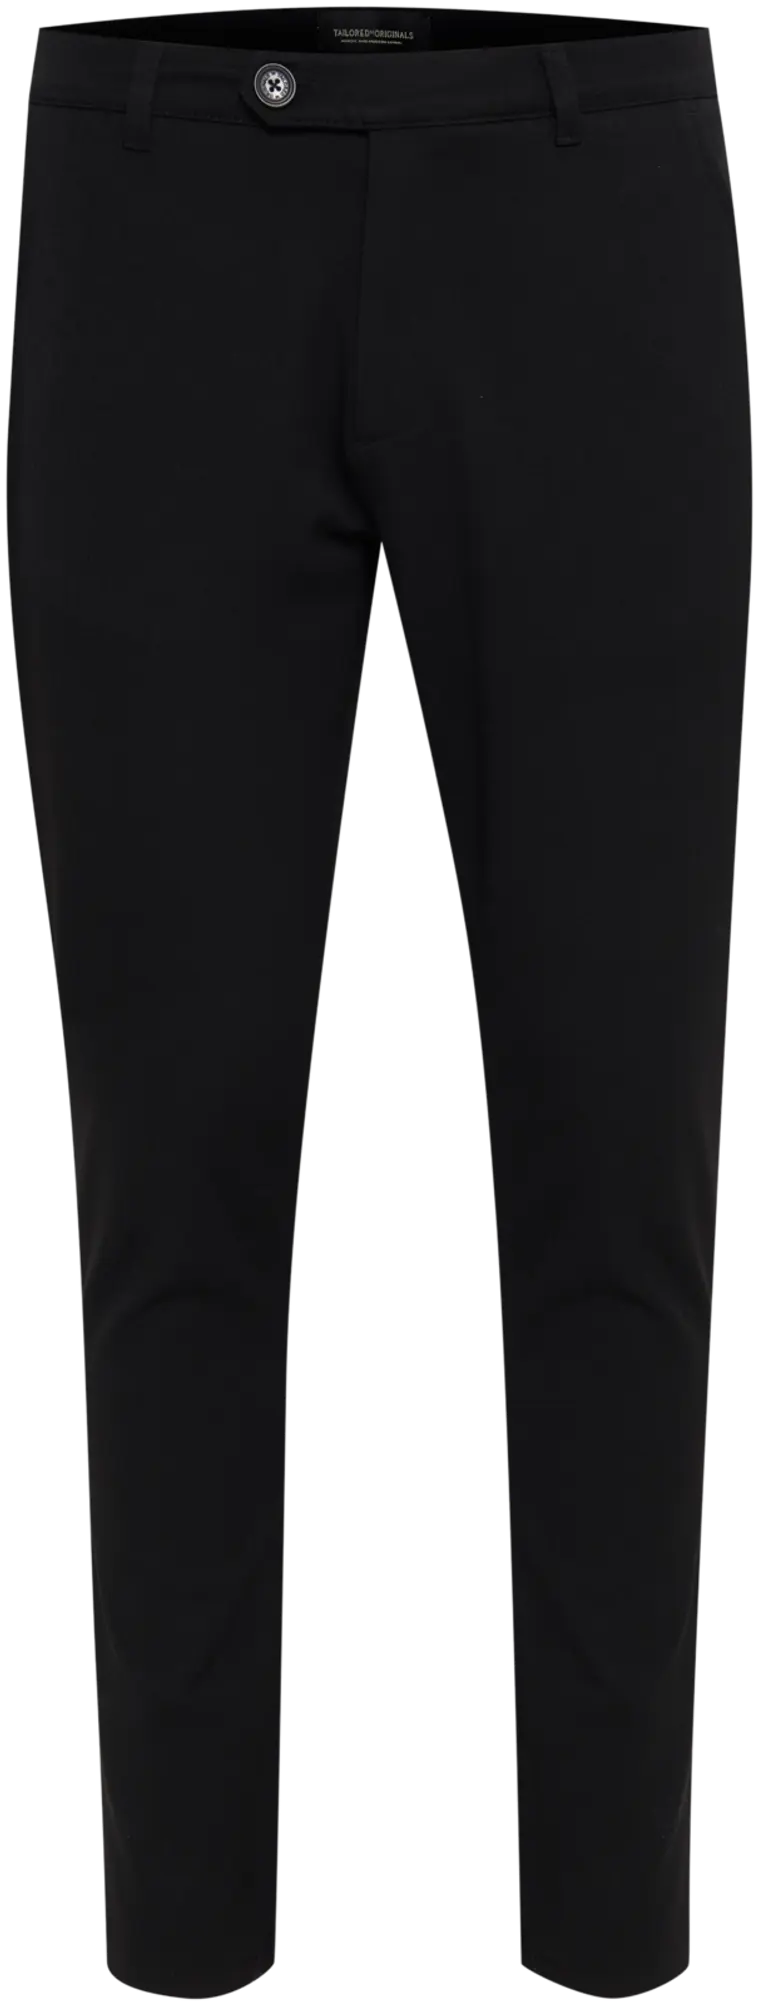 Solid miesten puvunhousut TOFred - BLACK - 1